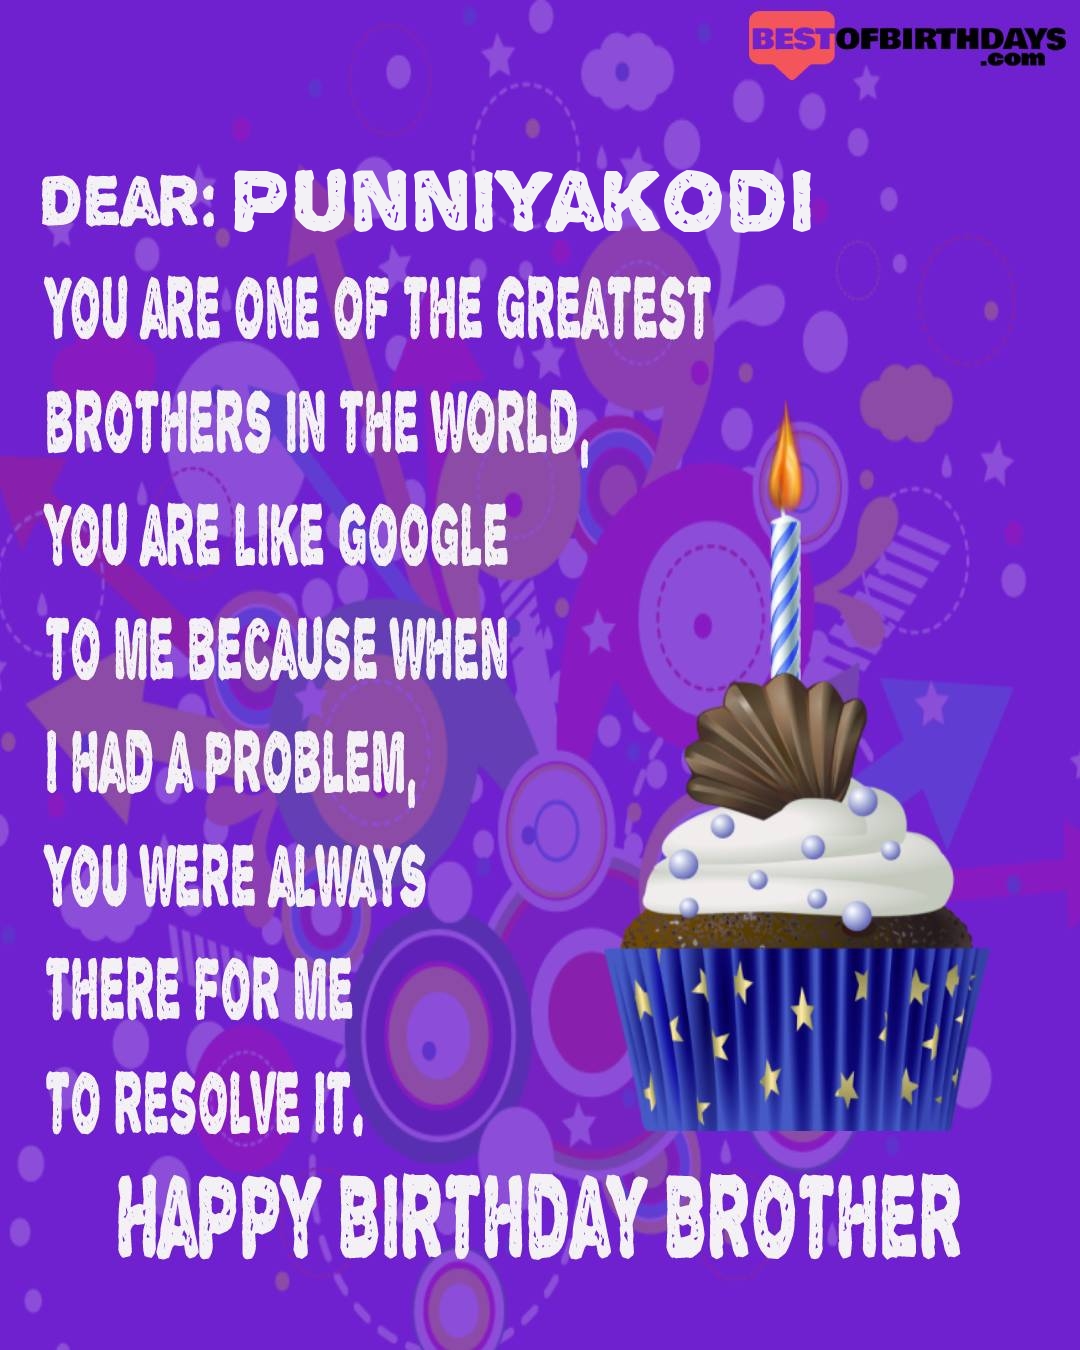 Happy birthday punniyakodi bhai brother bro